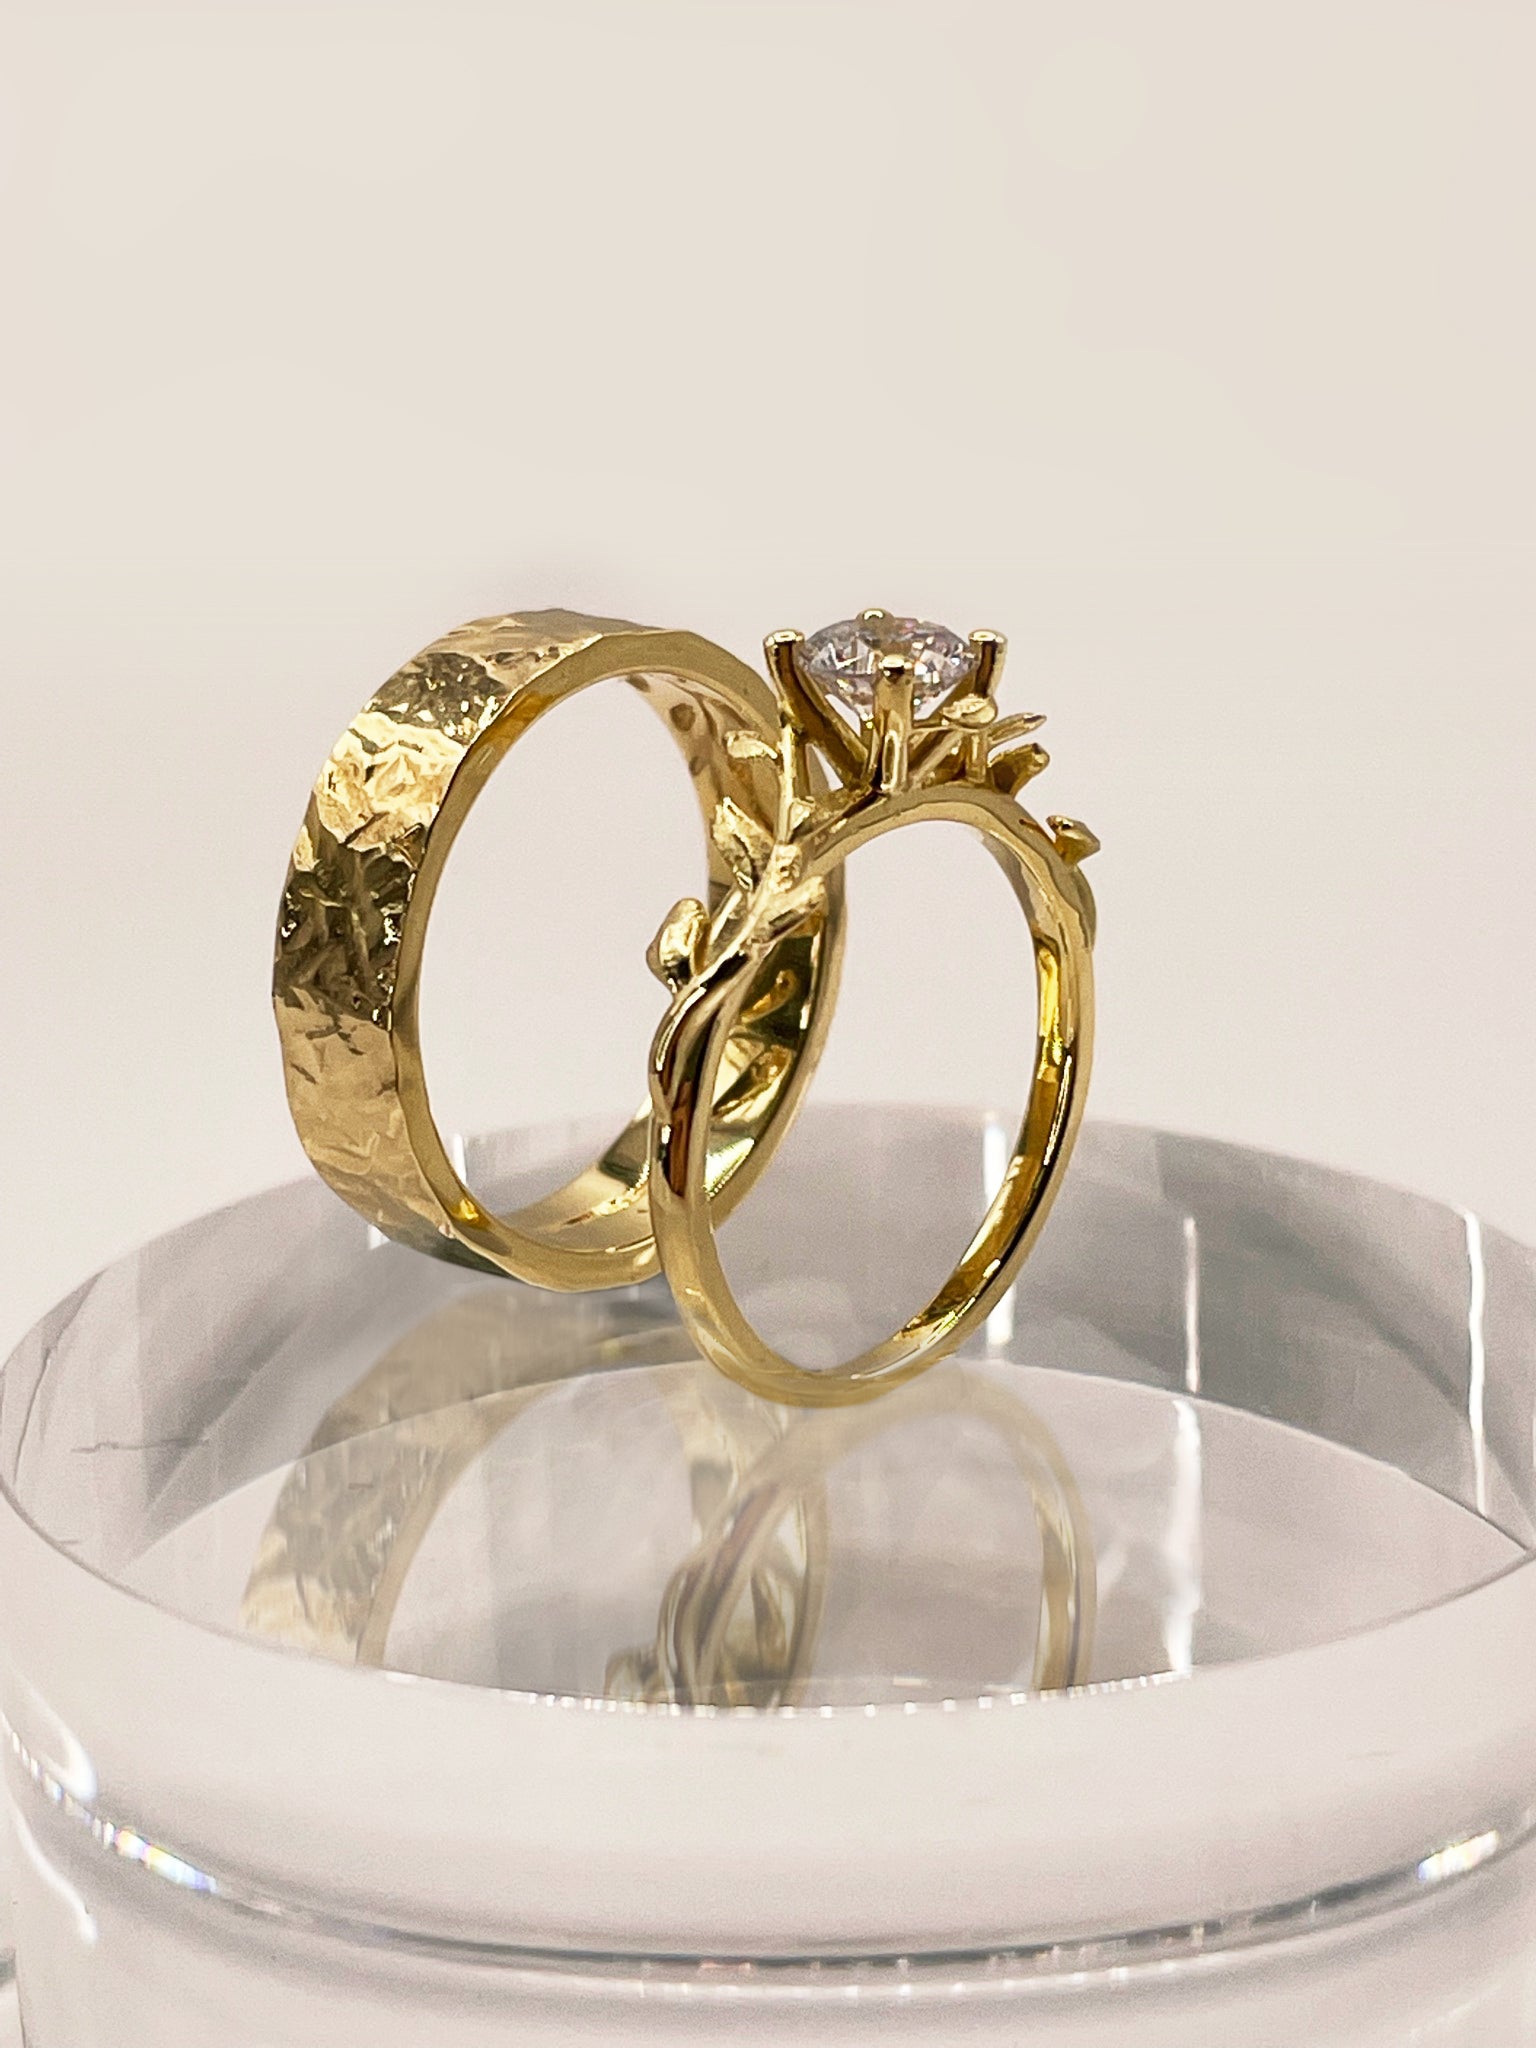 Gold & Diamond Rings | Gold rings for Men & Women - Thangamayil Jewellery